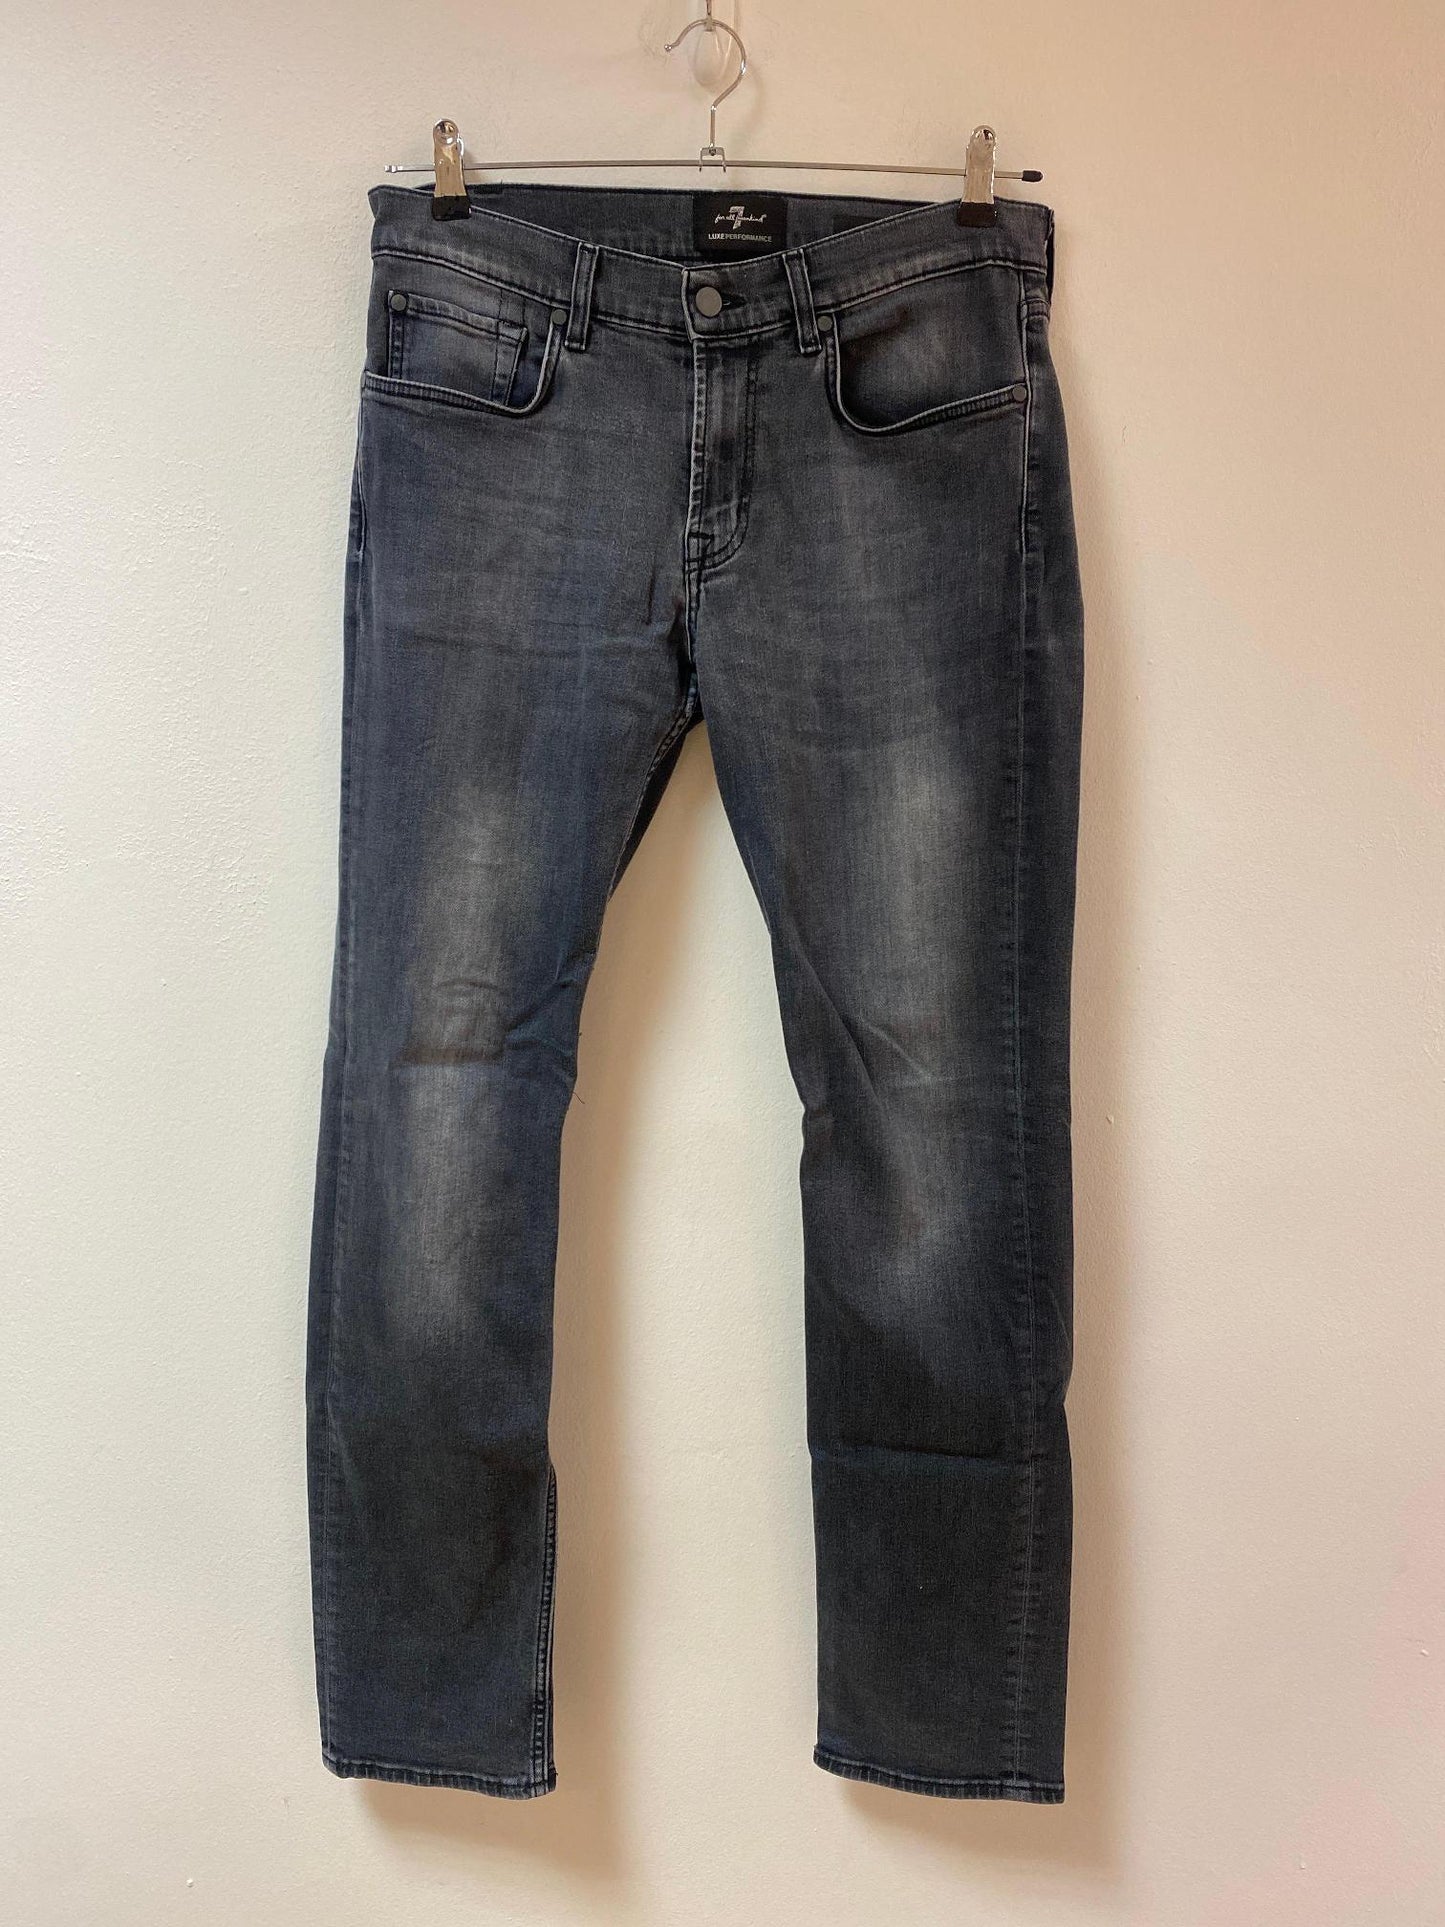 Grey Slim Leg Jeans, 7 For All Mankind, Size W32 - Damaged Item Sale